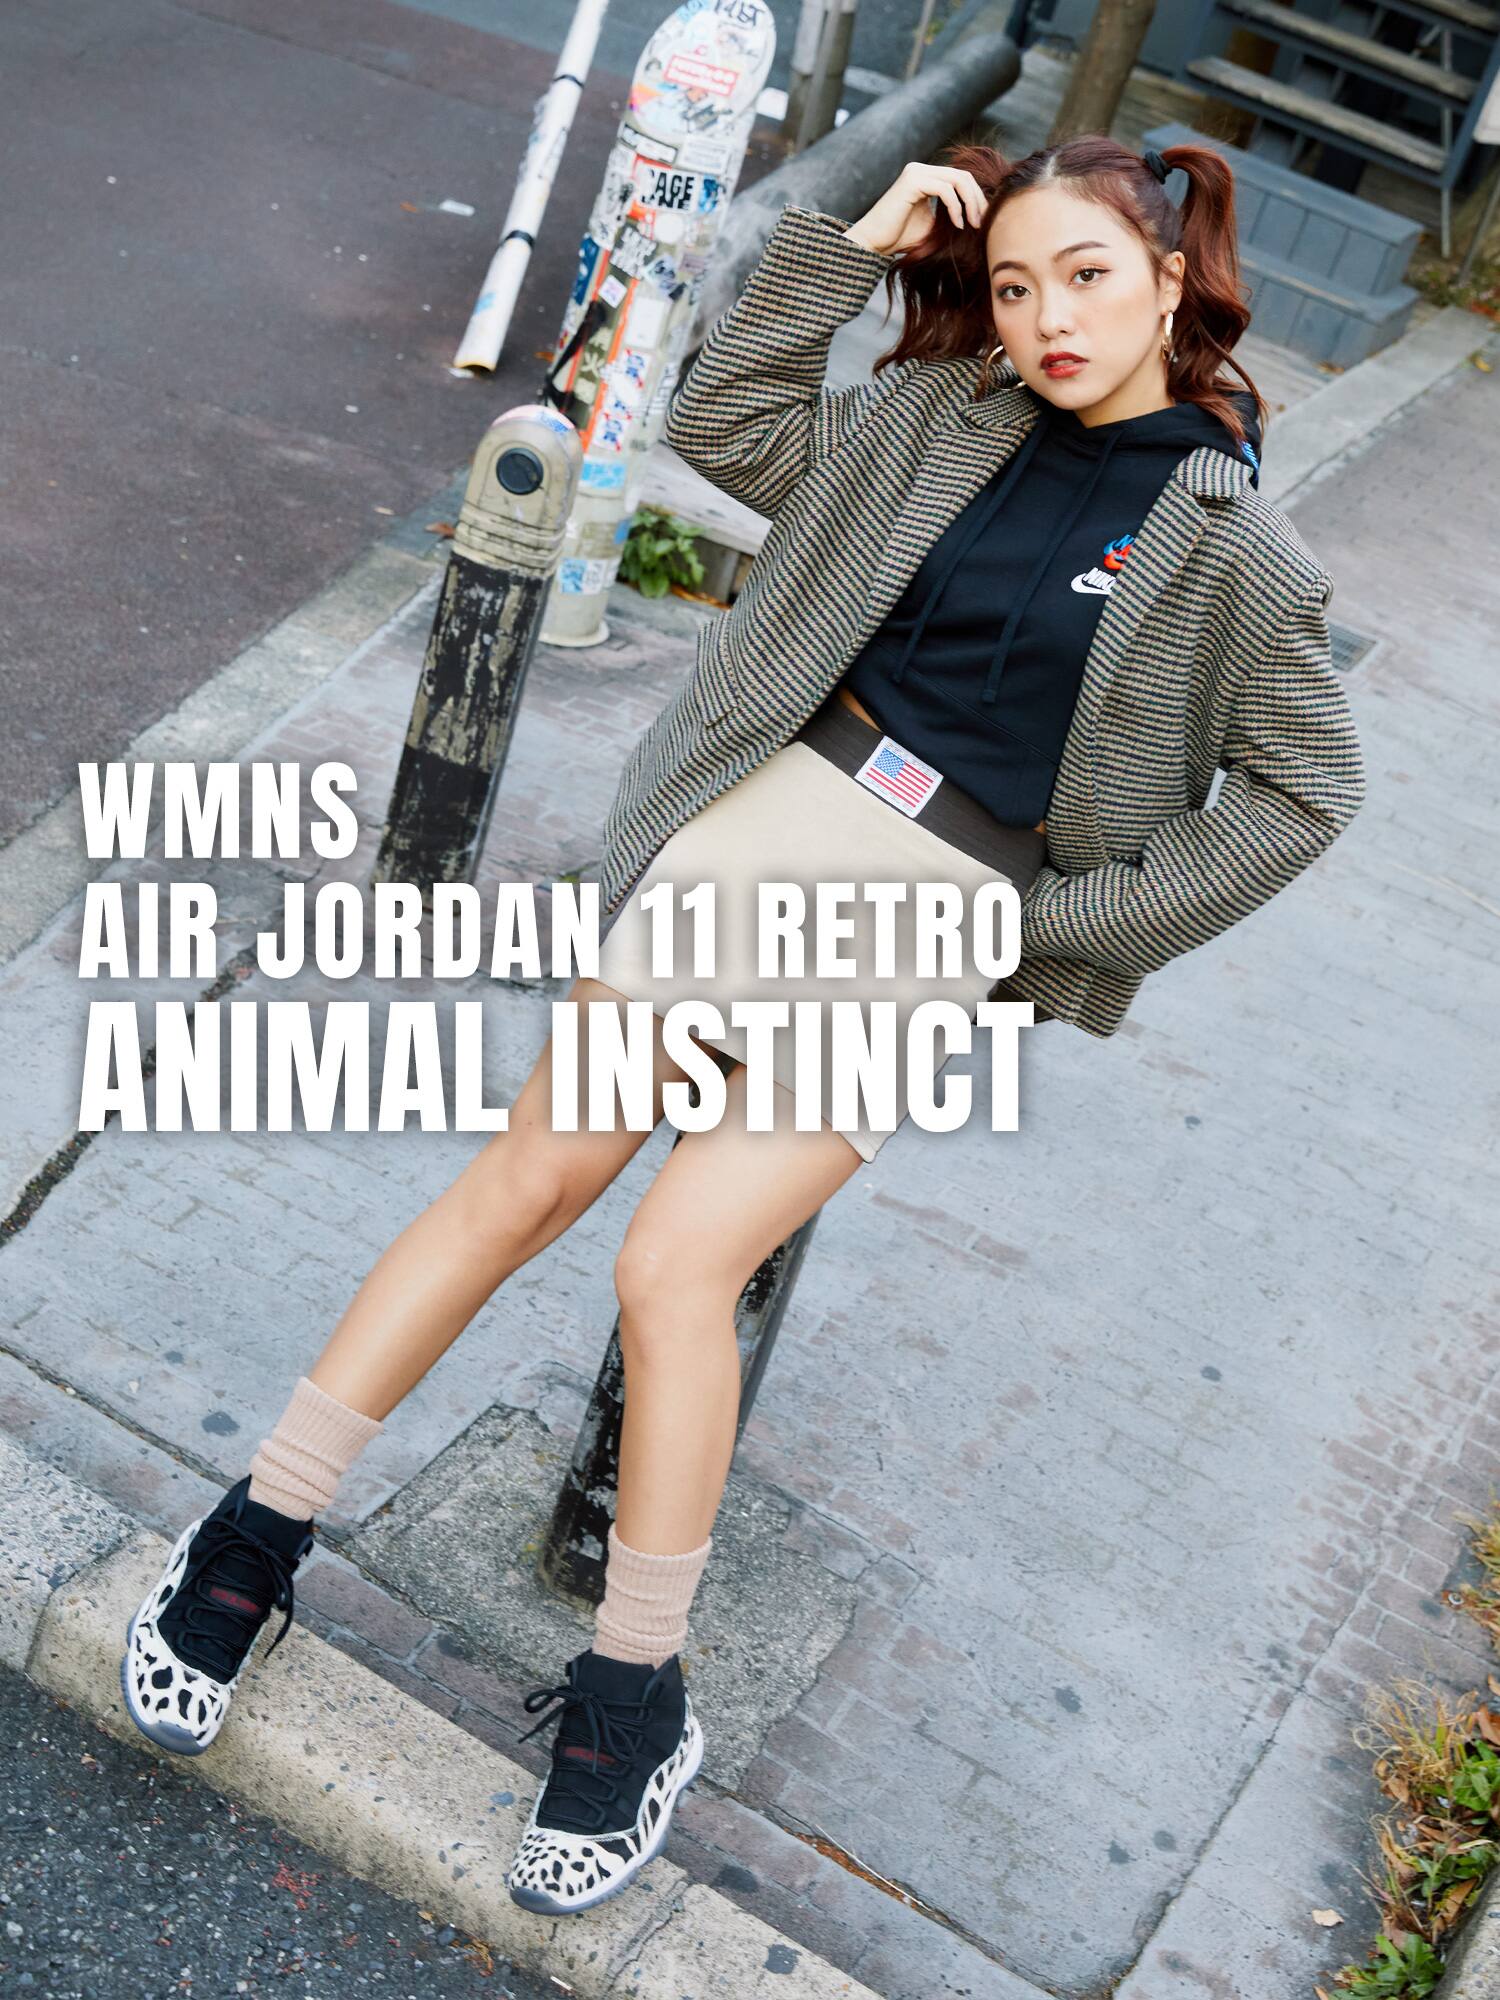 WMNS AIR JORDAN 11 RETRO ANIMAL INSTINCT